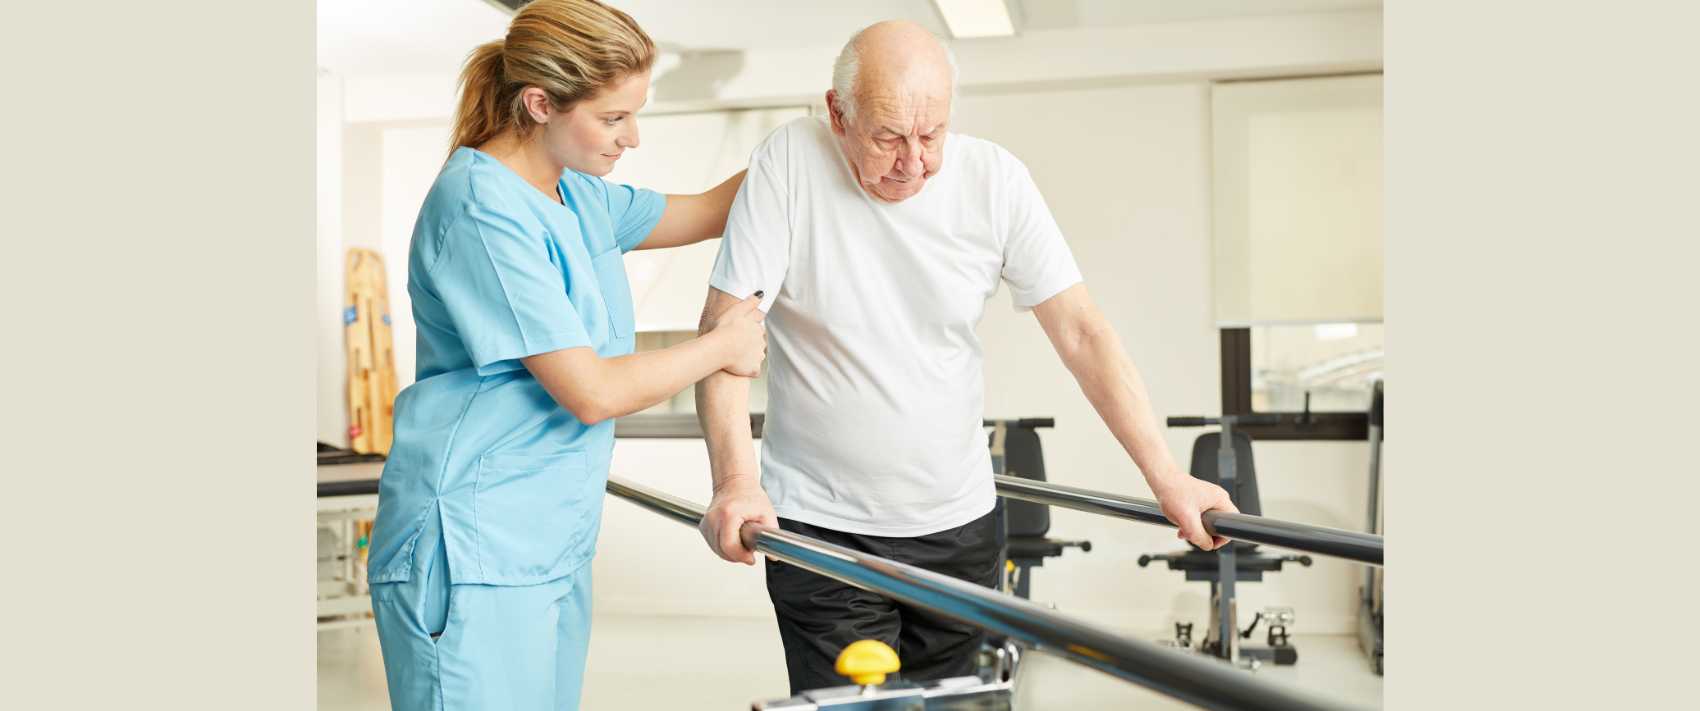 physiotherapist help senior man handicap while running in rehab